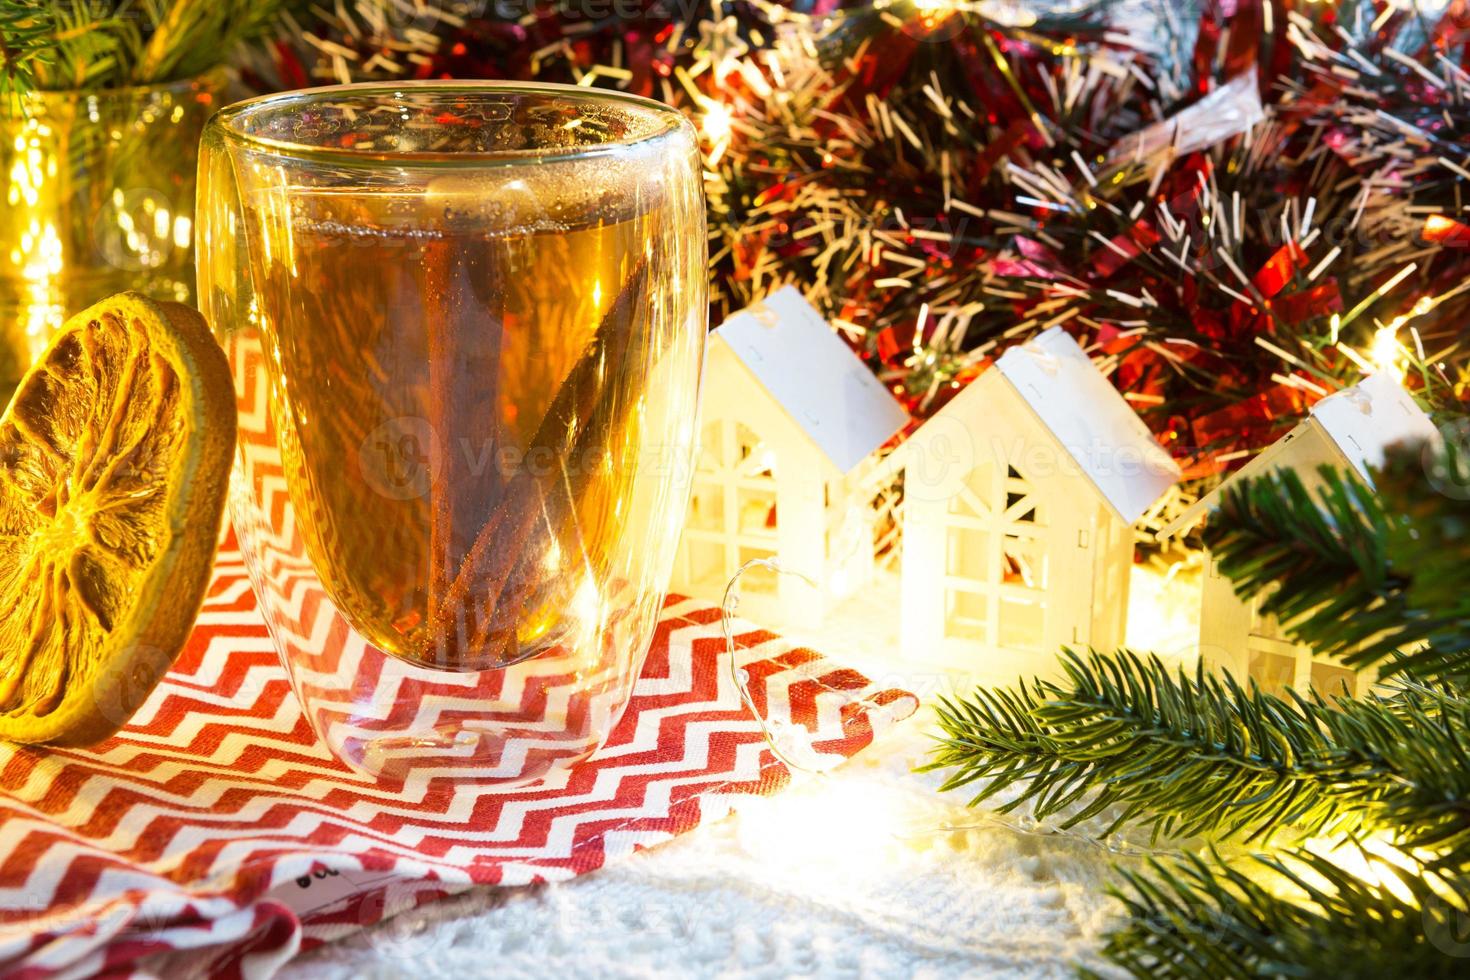 transparant dubbelwandig glas tuimelaar met heet thee en kaneel stokjes Aan de tafel met Kerstmis decor en klein huis. nieuw jaar atmosfeer, plak van droog oranje, guirlande, net tak, knus foto